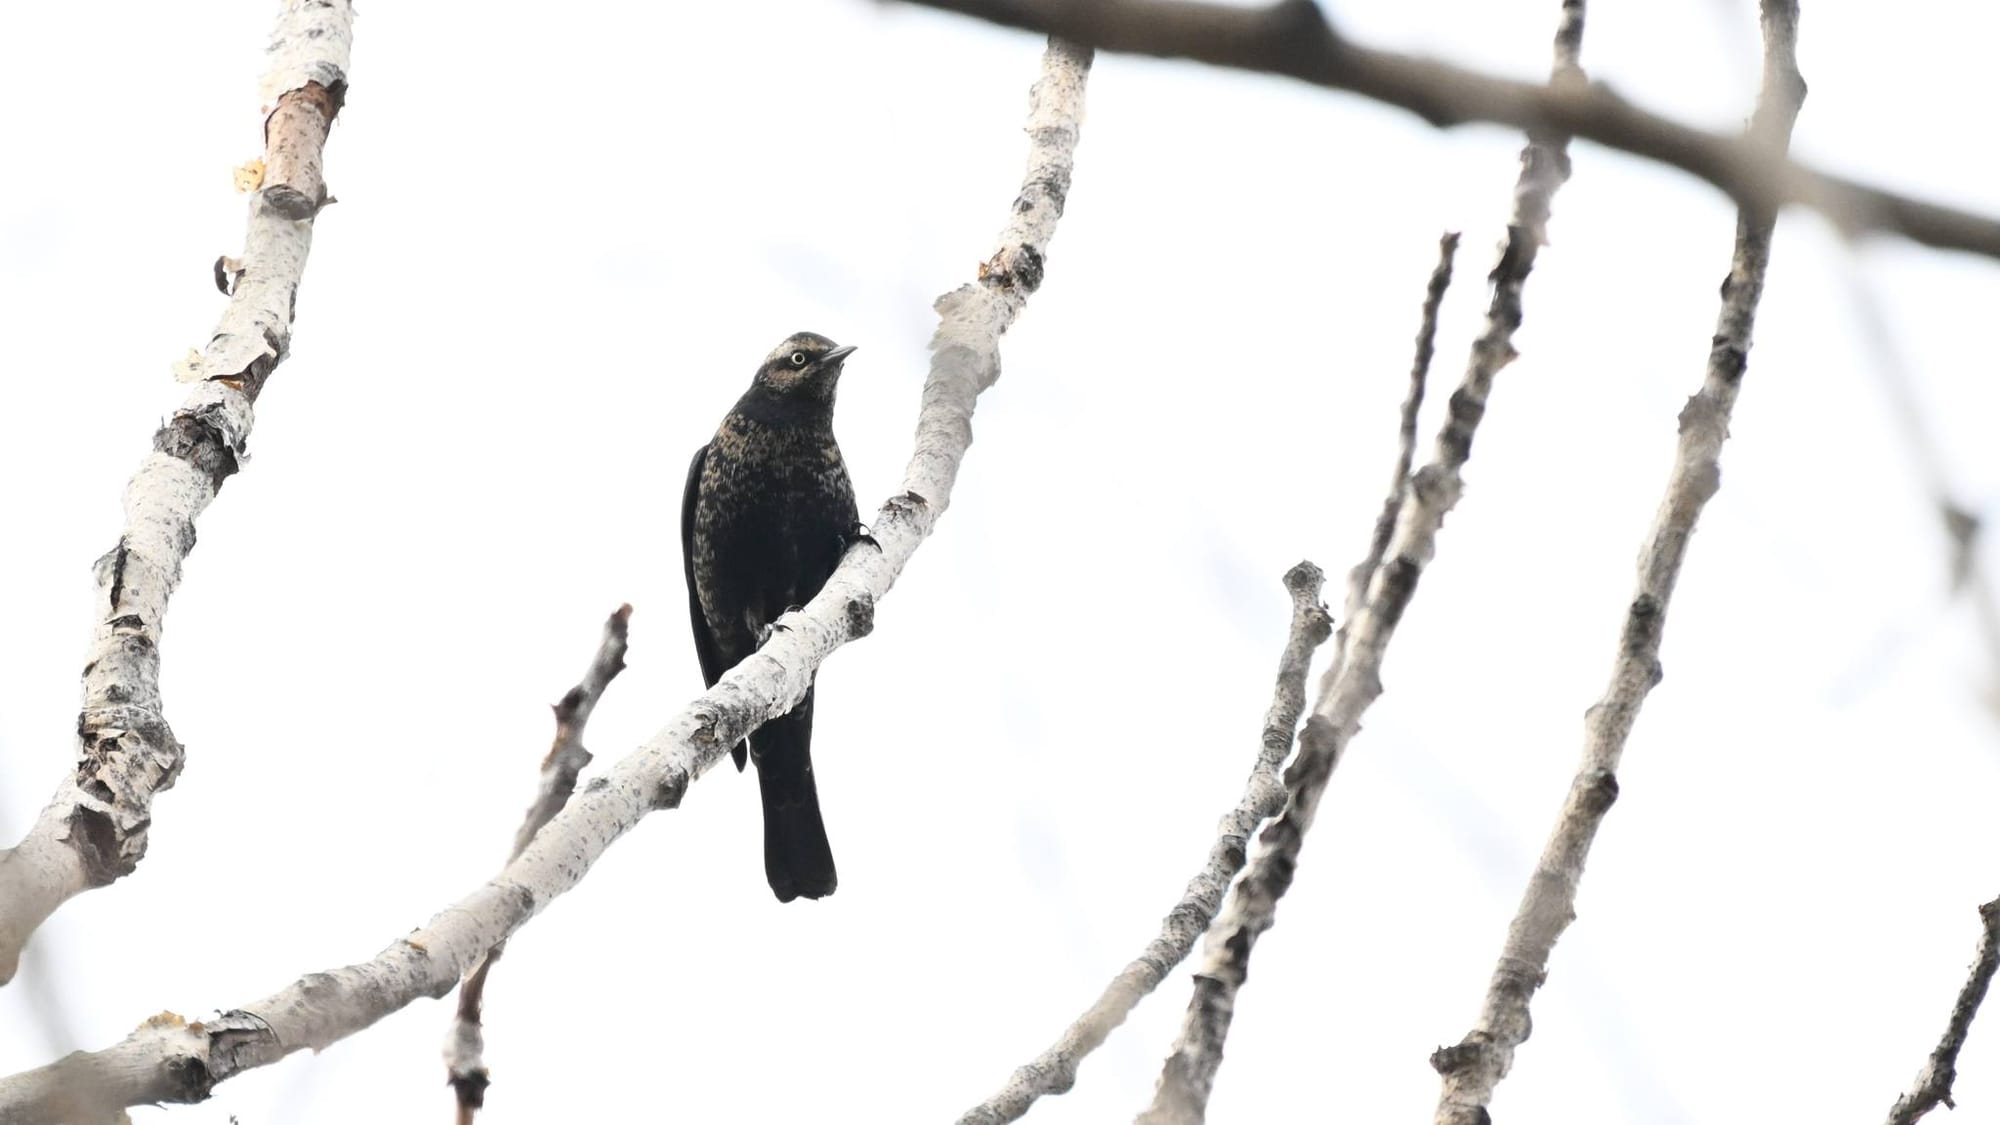 rusty blackbird